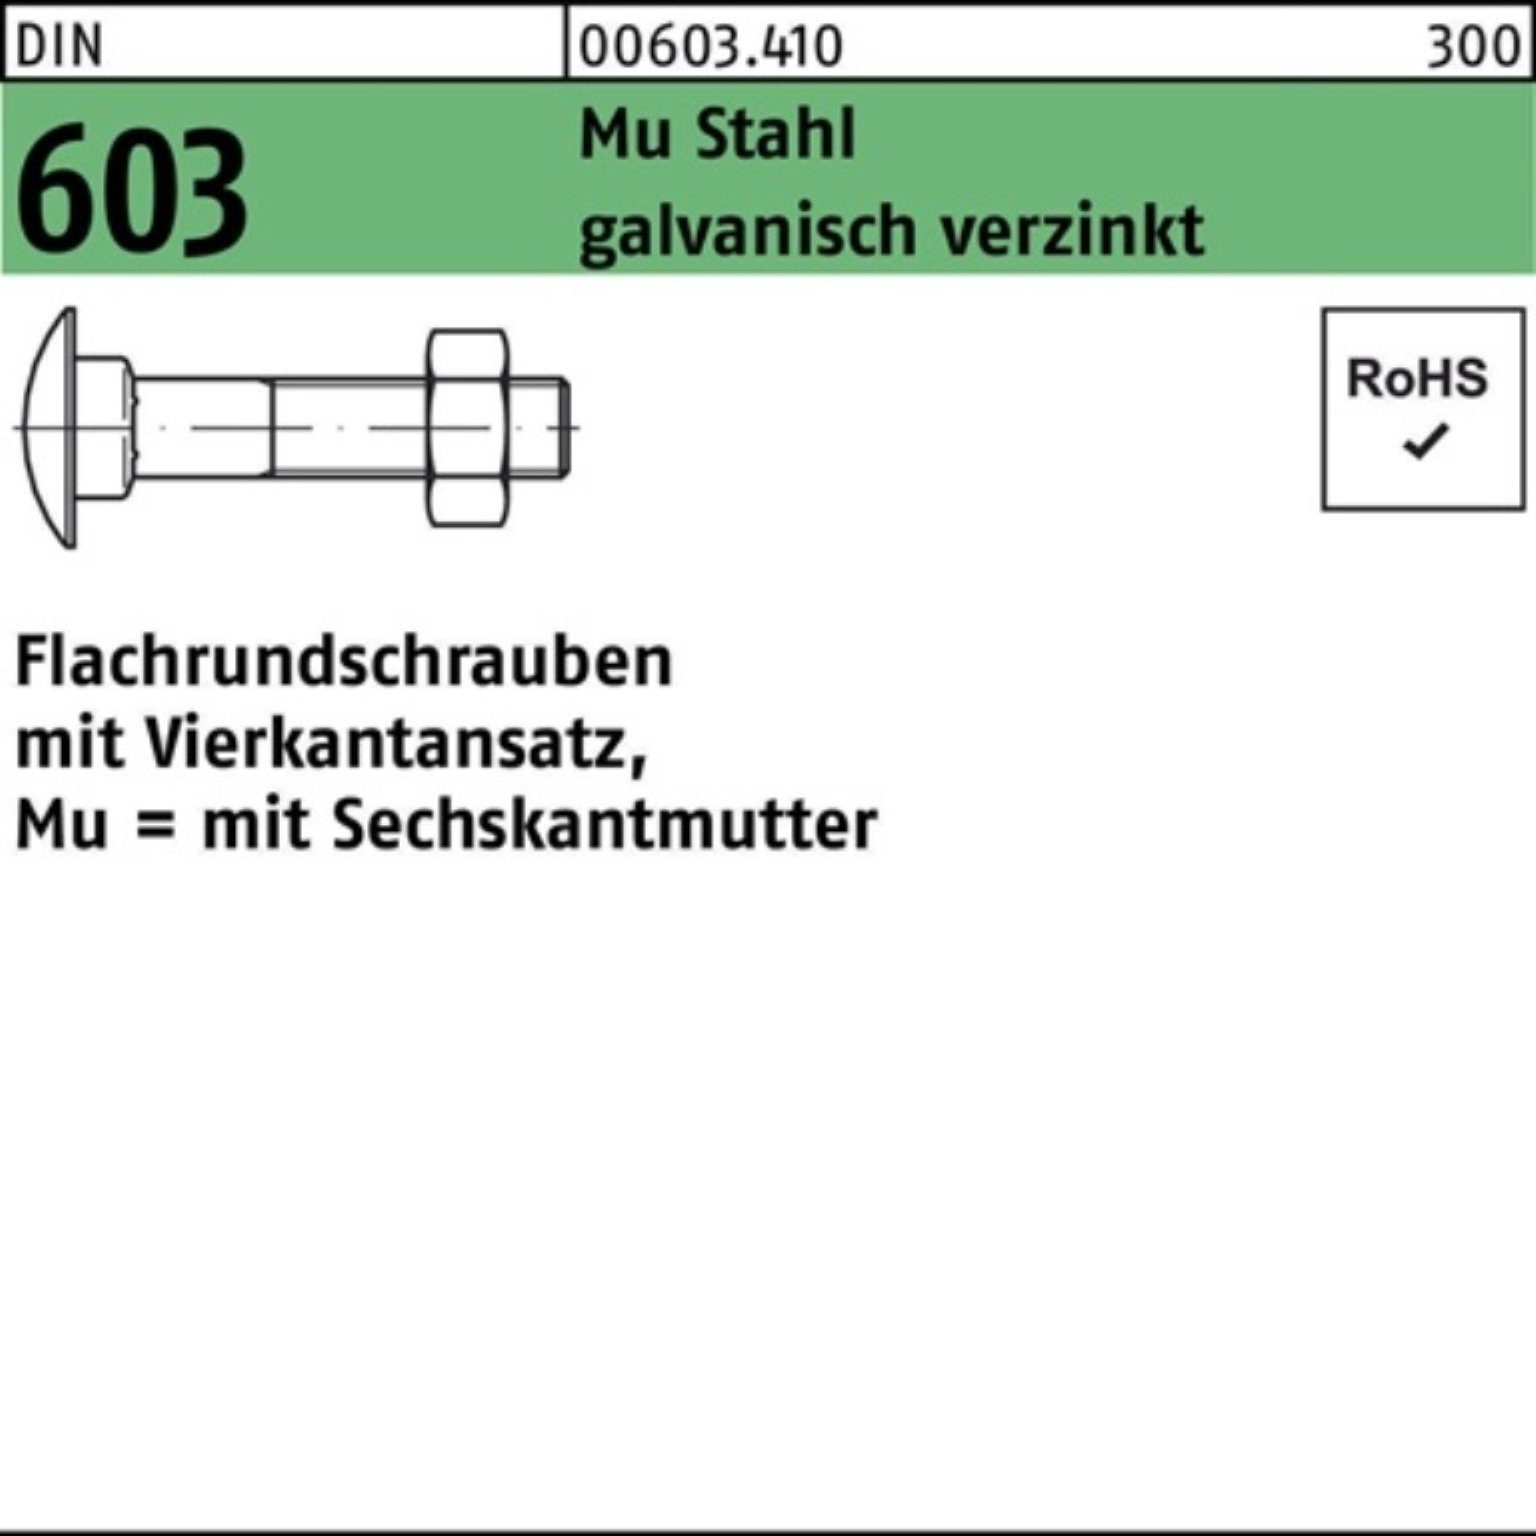 Reyher Schraube 100er Pack Flachrundschraube DIN 603 Vierkantansatz/6-ktmutter M10x130